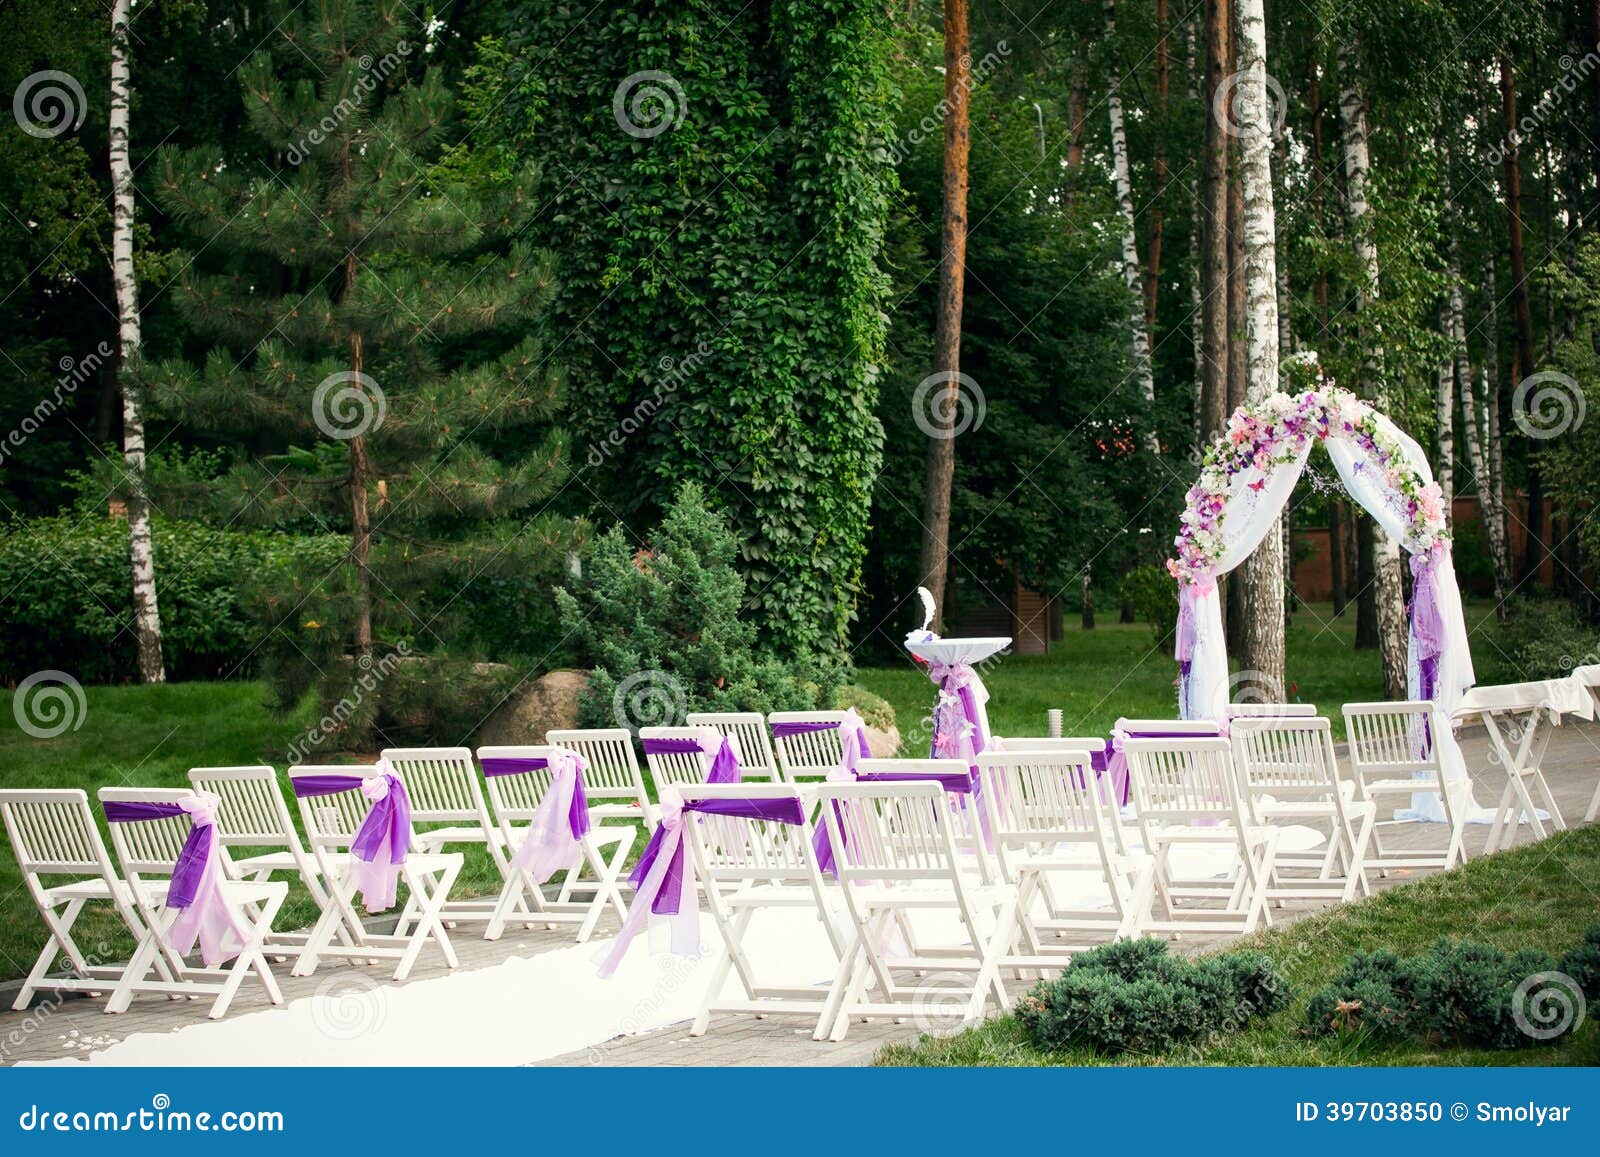 outdoor wedding ceremony decoration